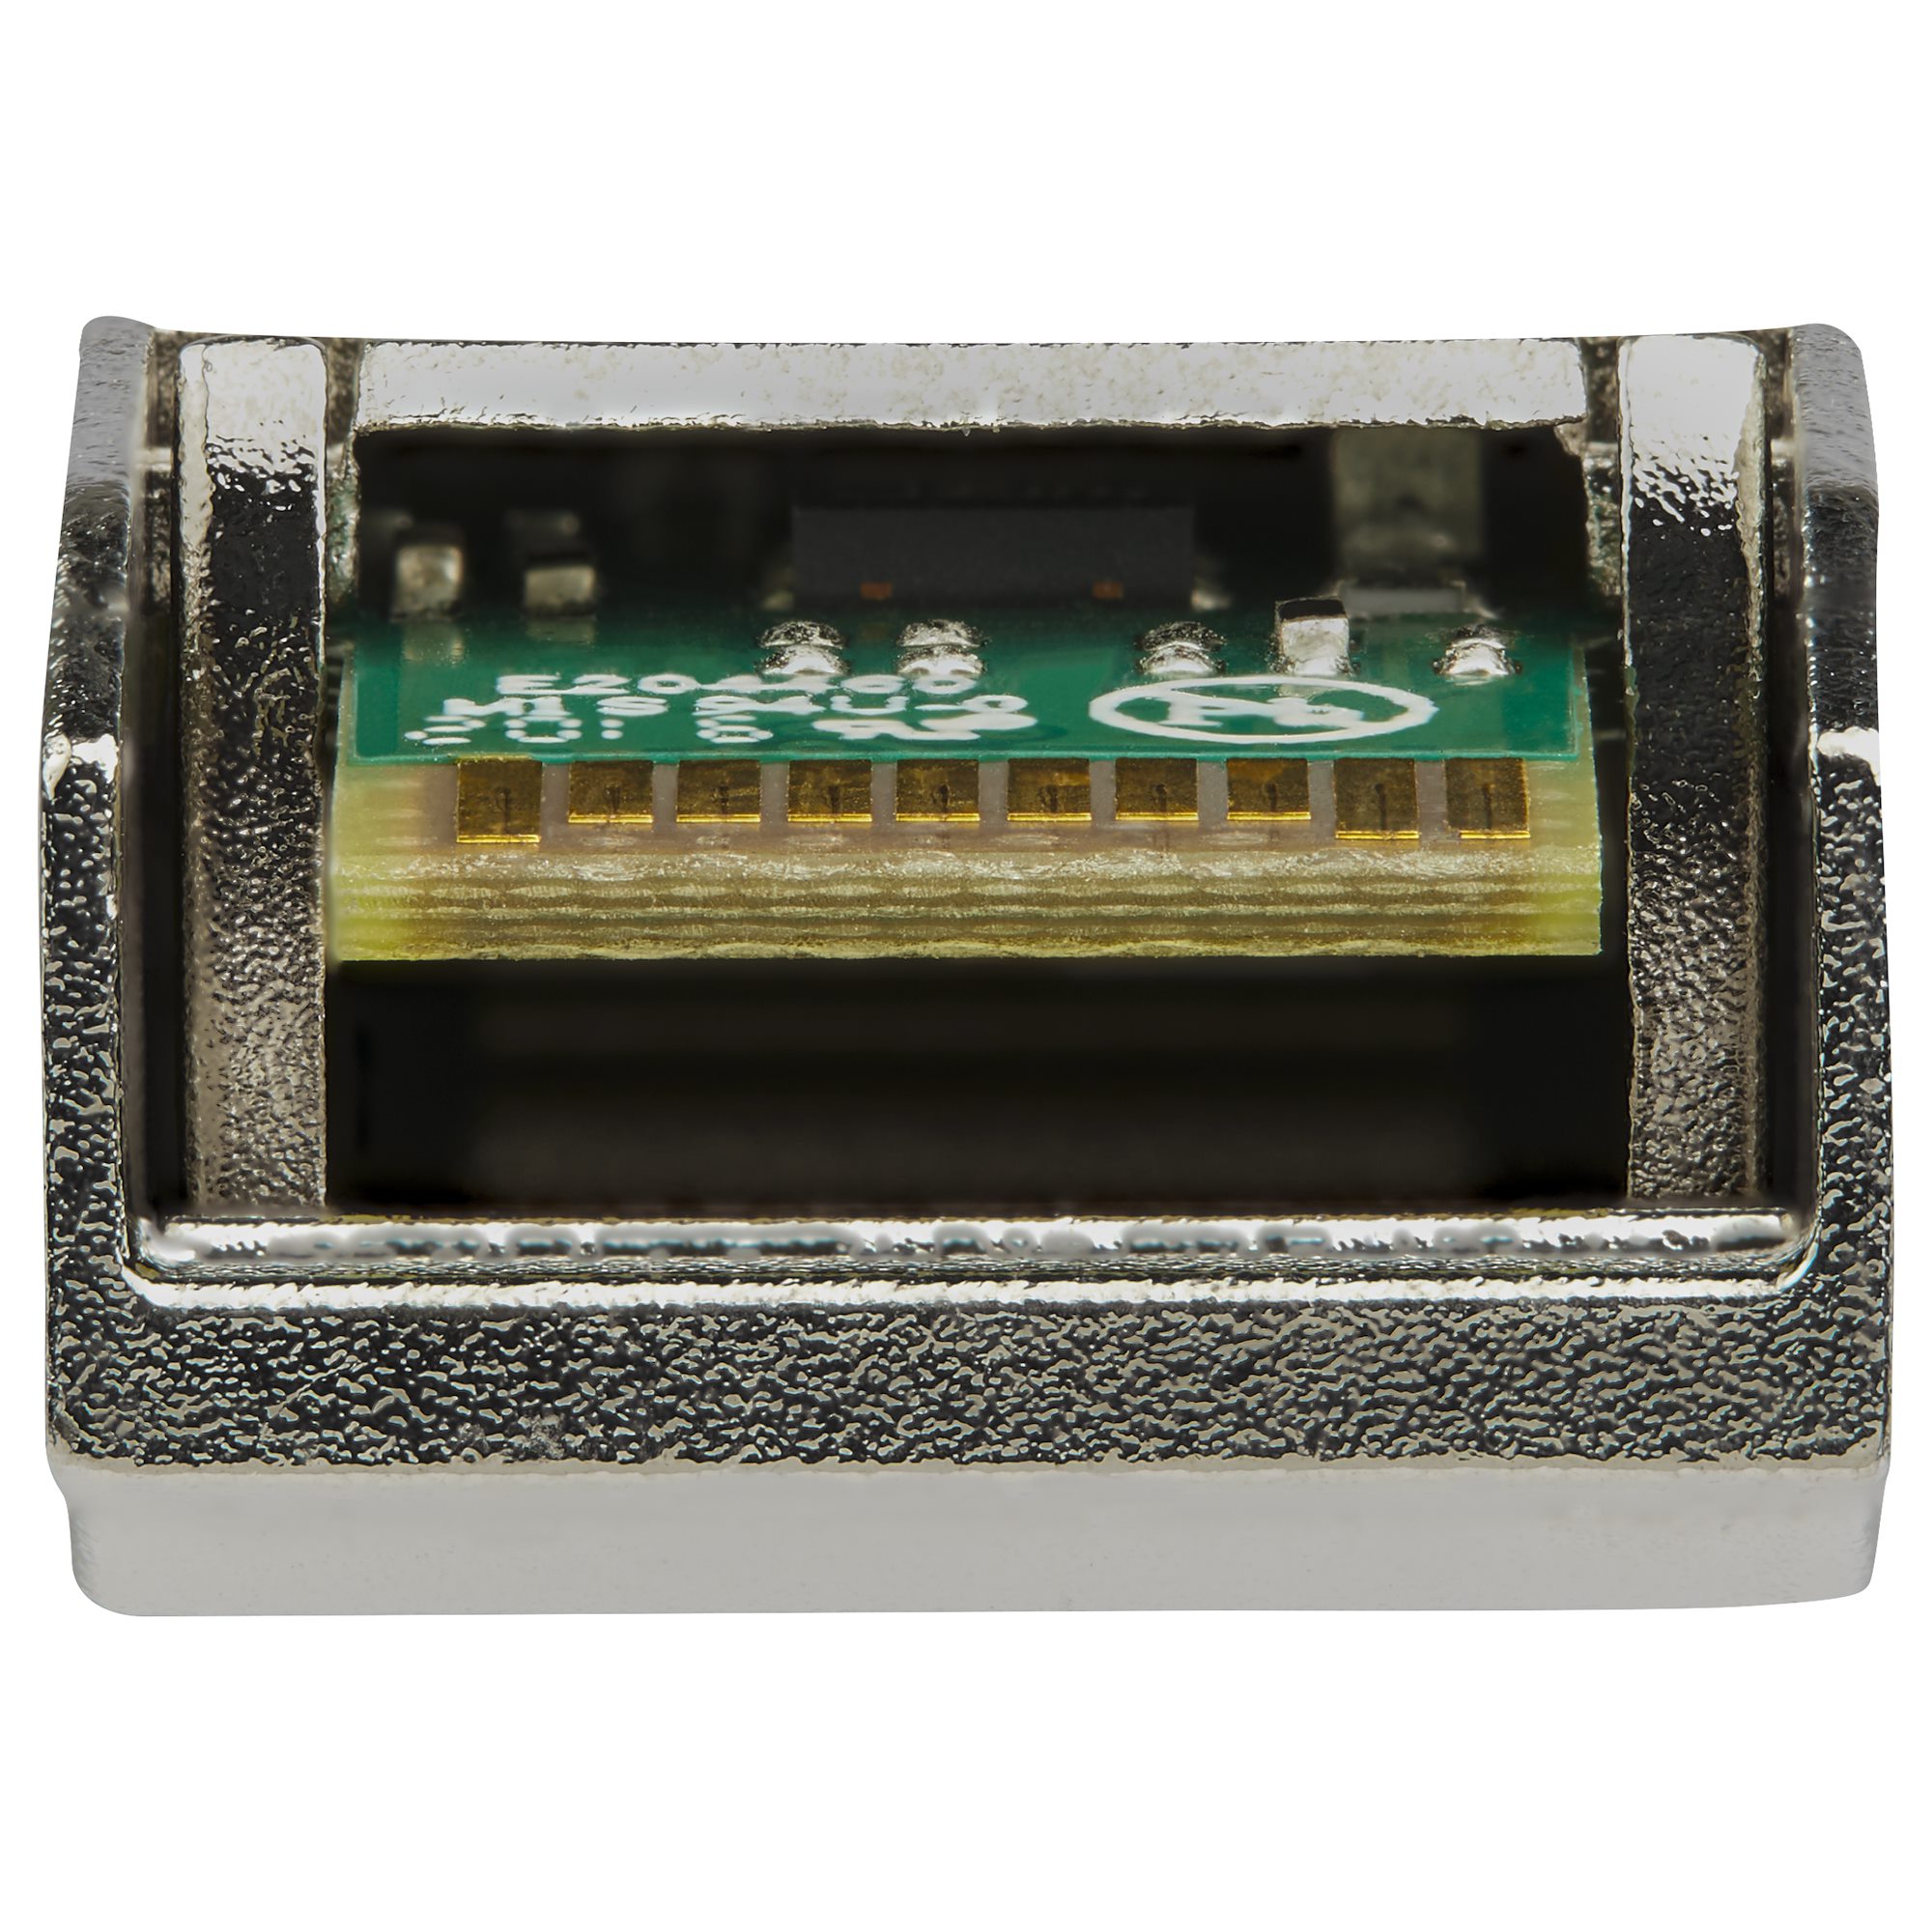 CAT5e Cable, up to 100m 6COM SFP to RJ45 Copper Module Transceiver 1000Base-T Gigabit Transceiver for Juniper QFX-SFP-1GE-T/EX-SFP-1GE-T 